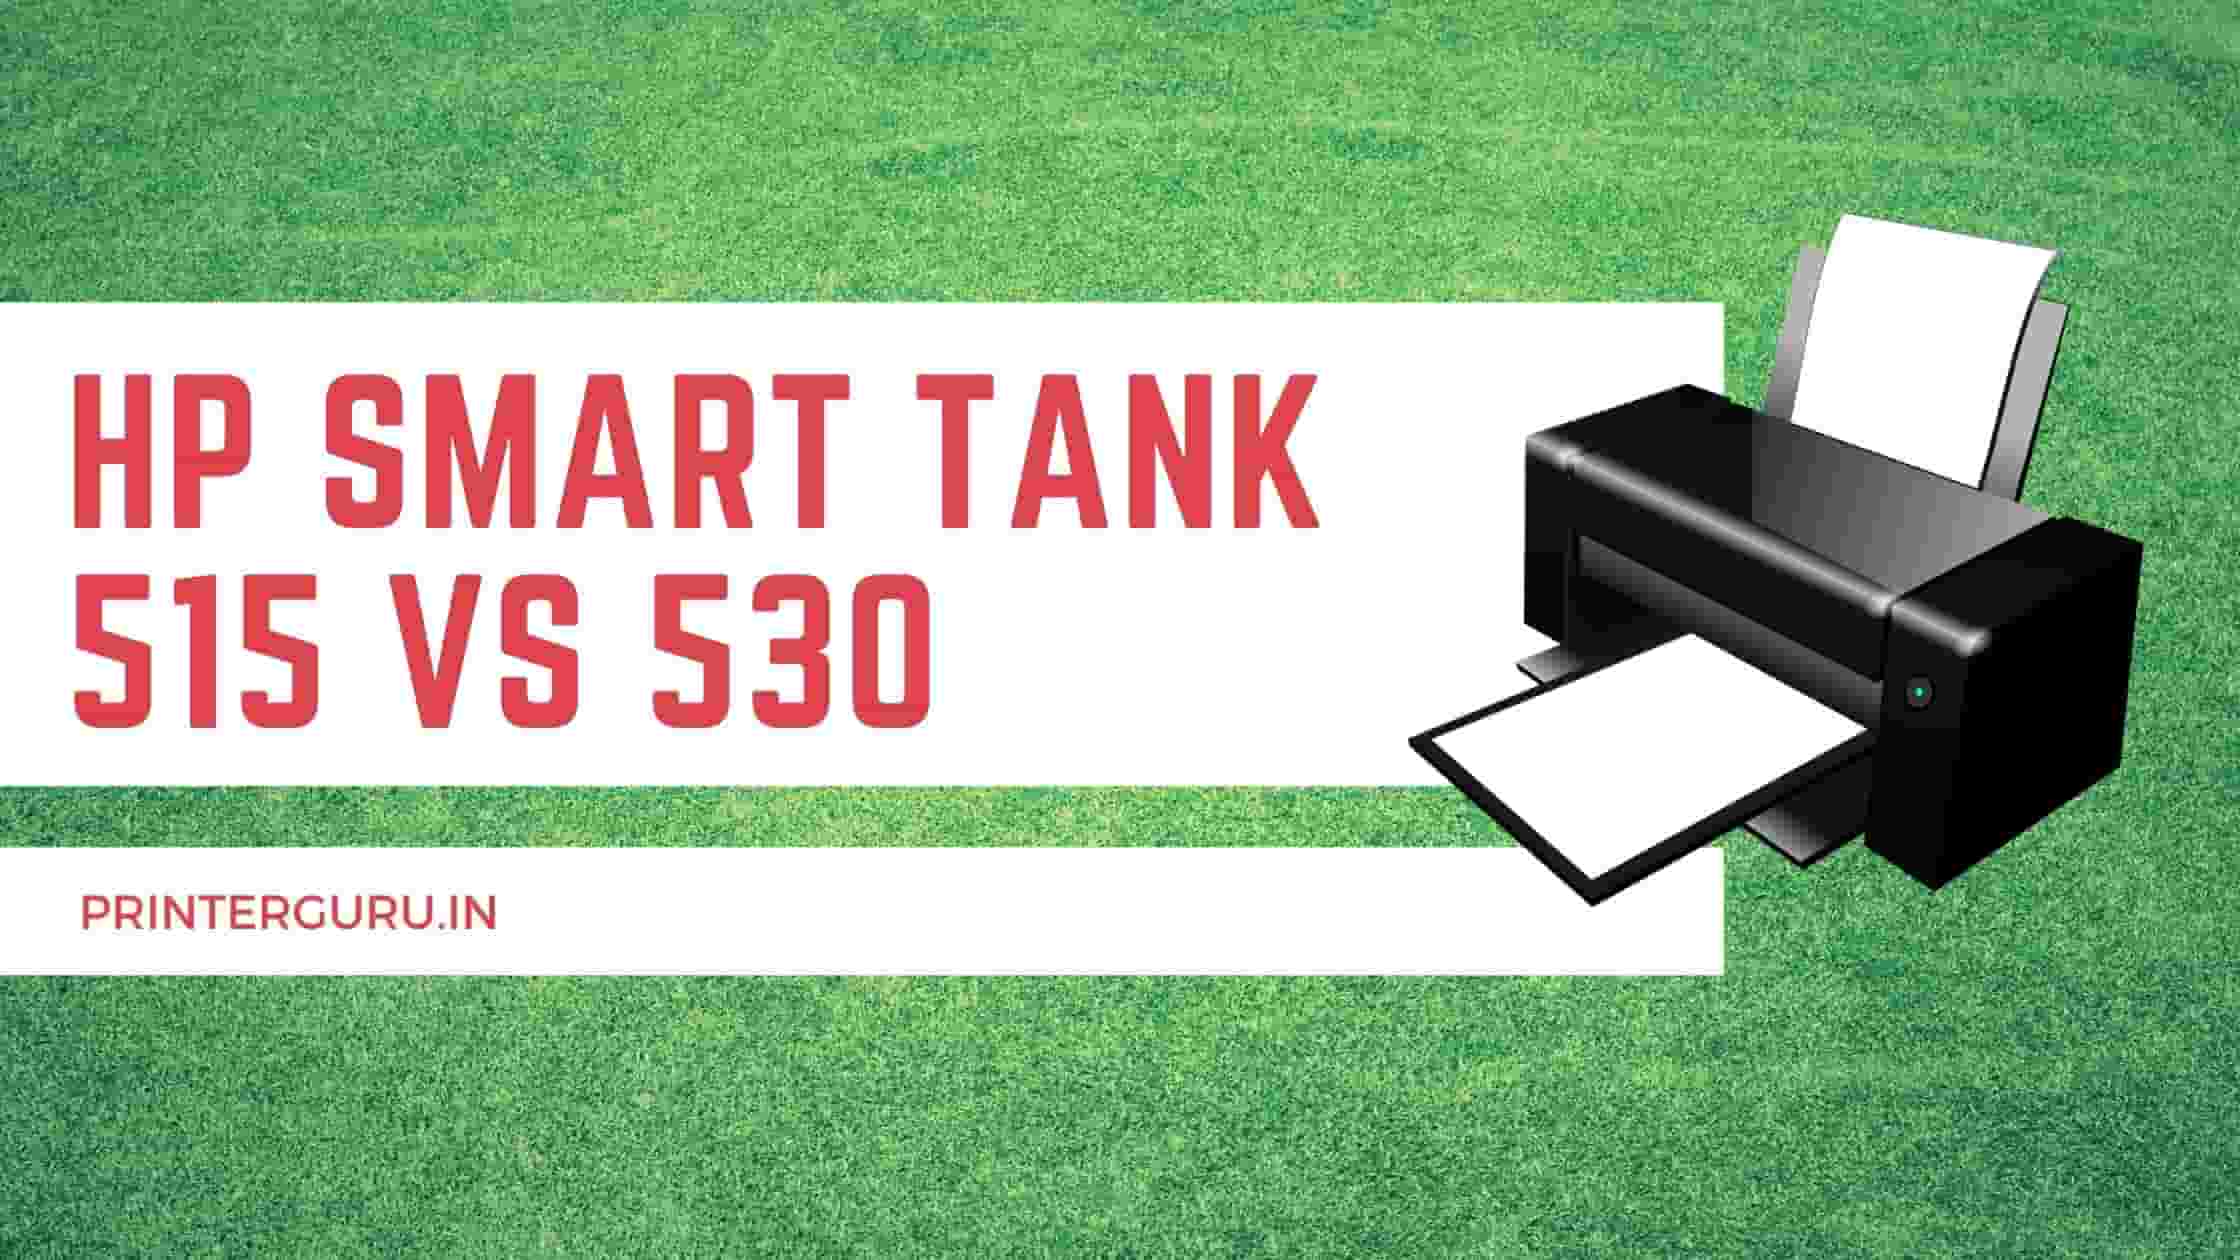 HP Smart Tank 515 vs 530